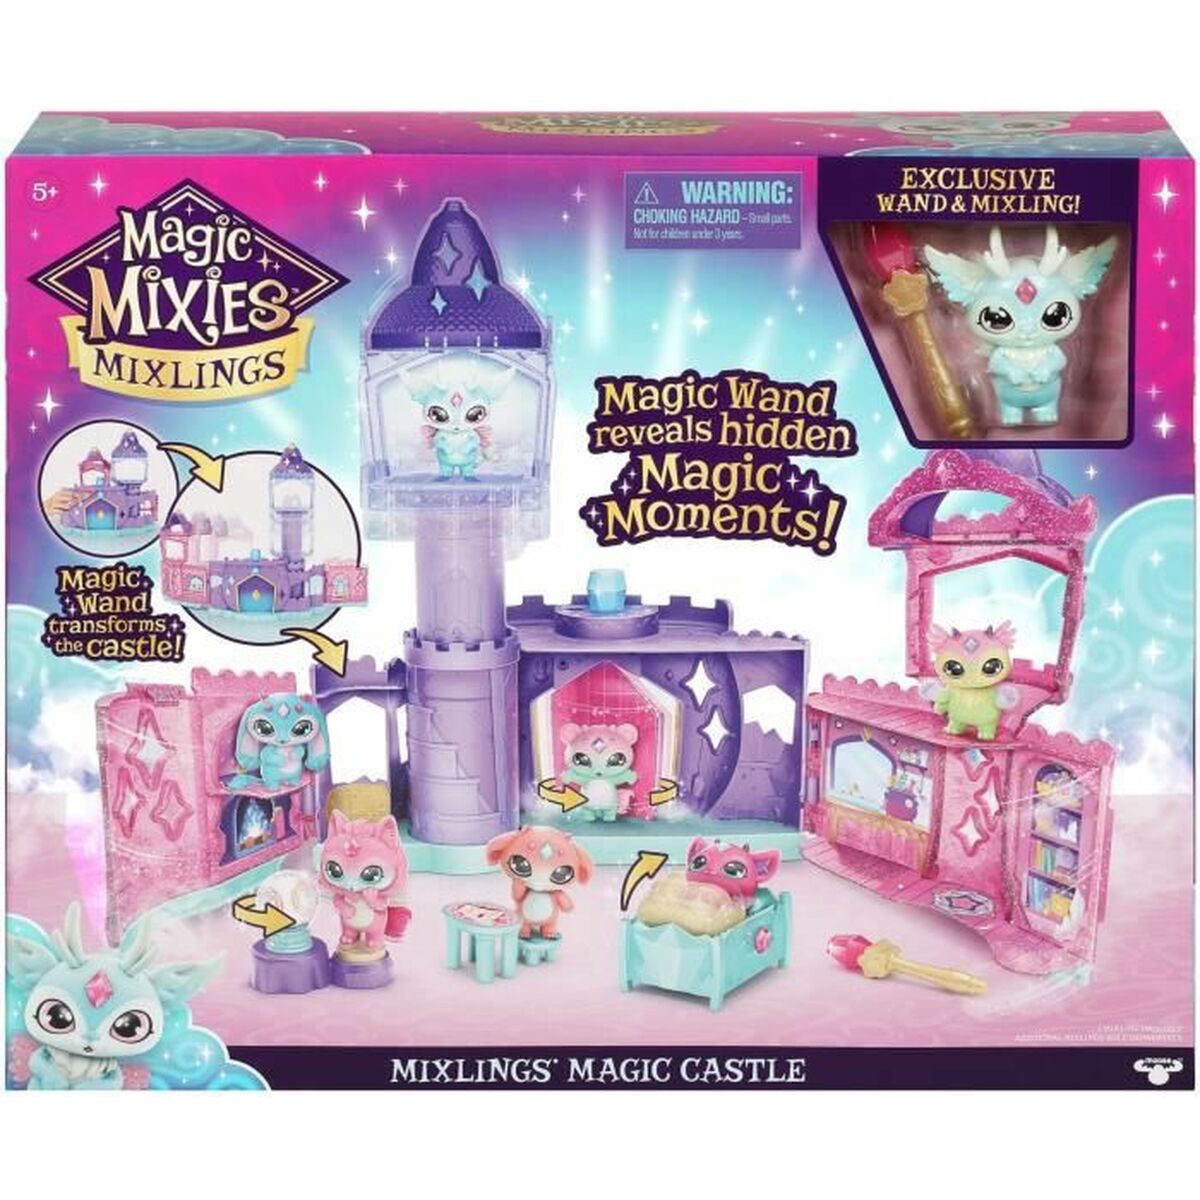 Casa in Miniatura Moose Toys Magic Mixies Mixlings Magisch Castello